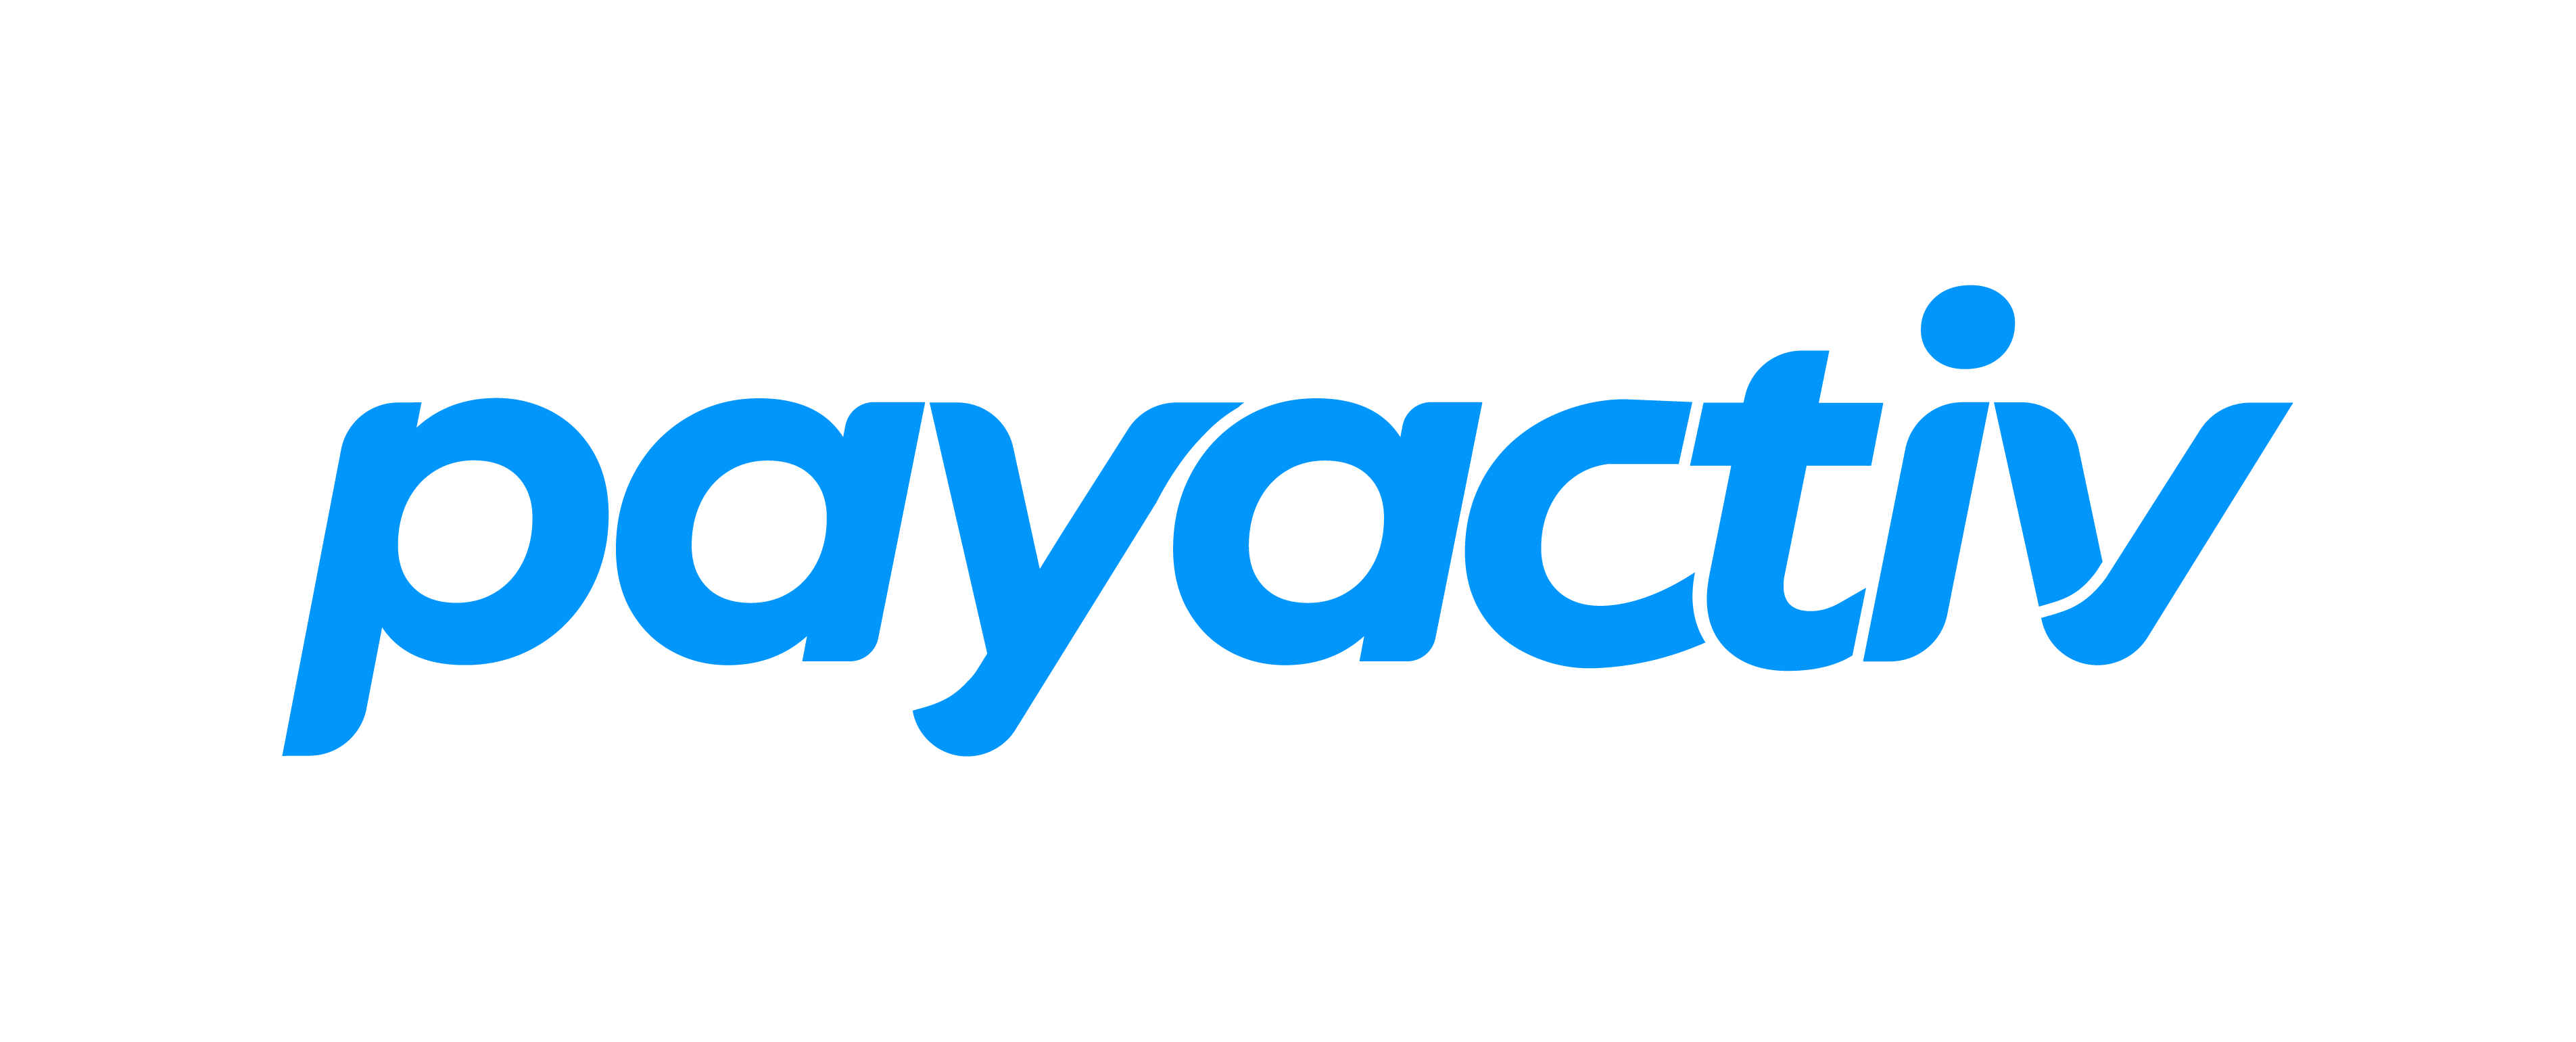 PayActiv logo